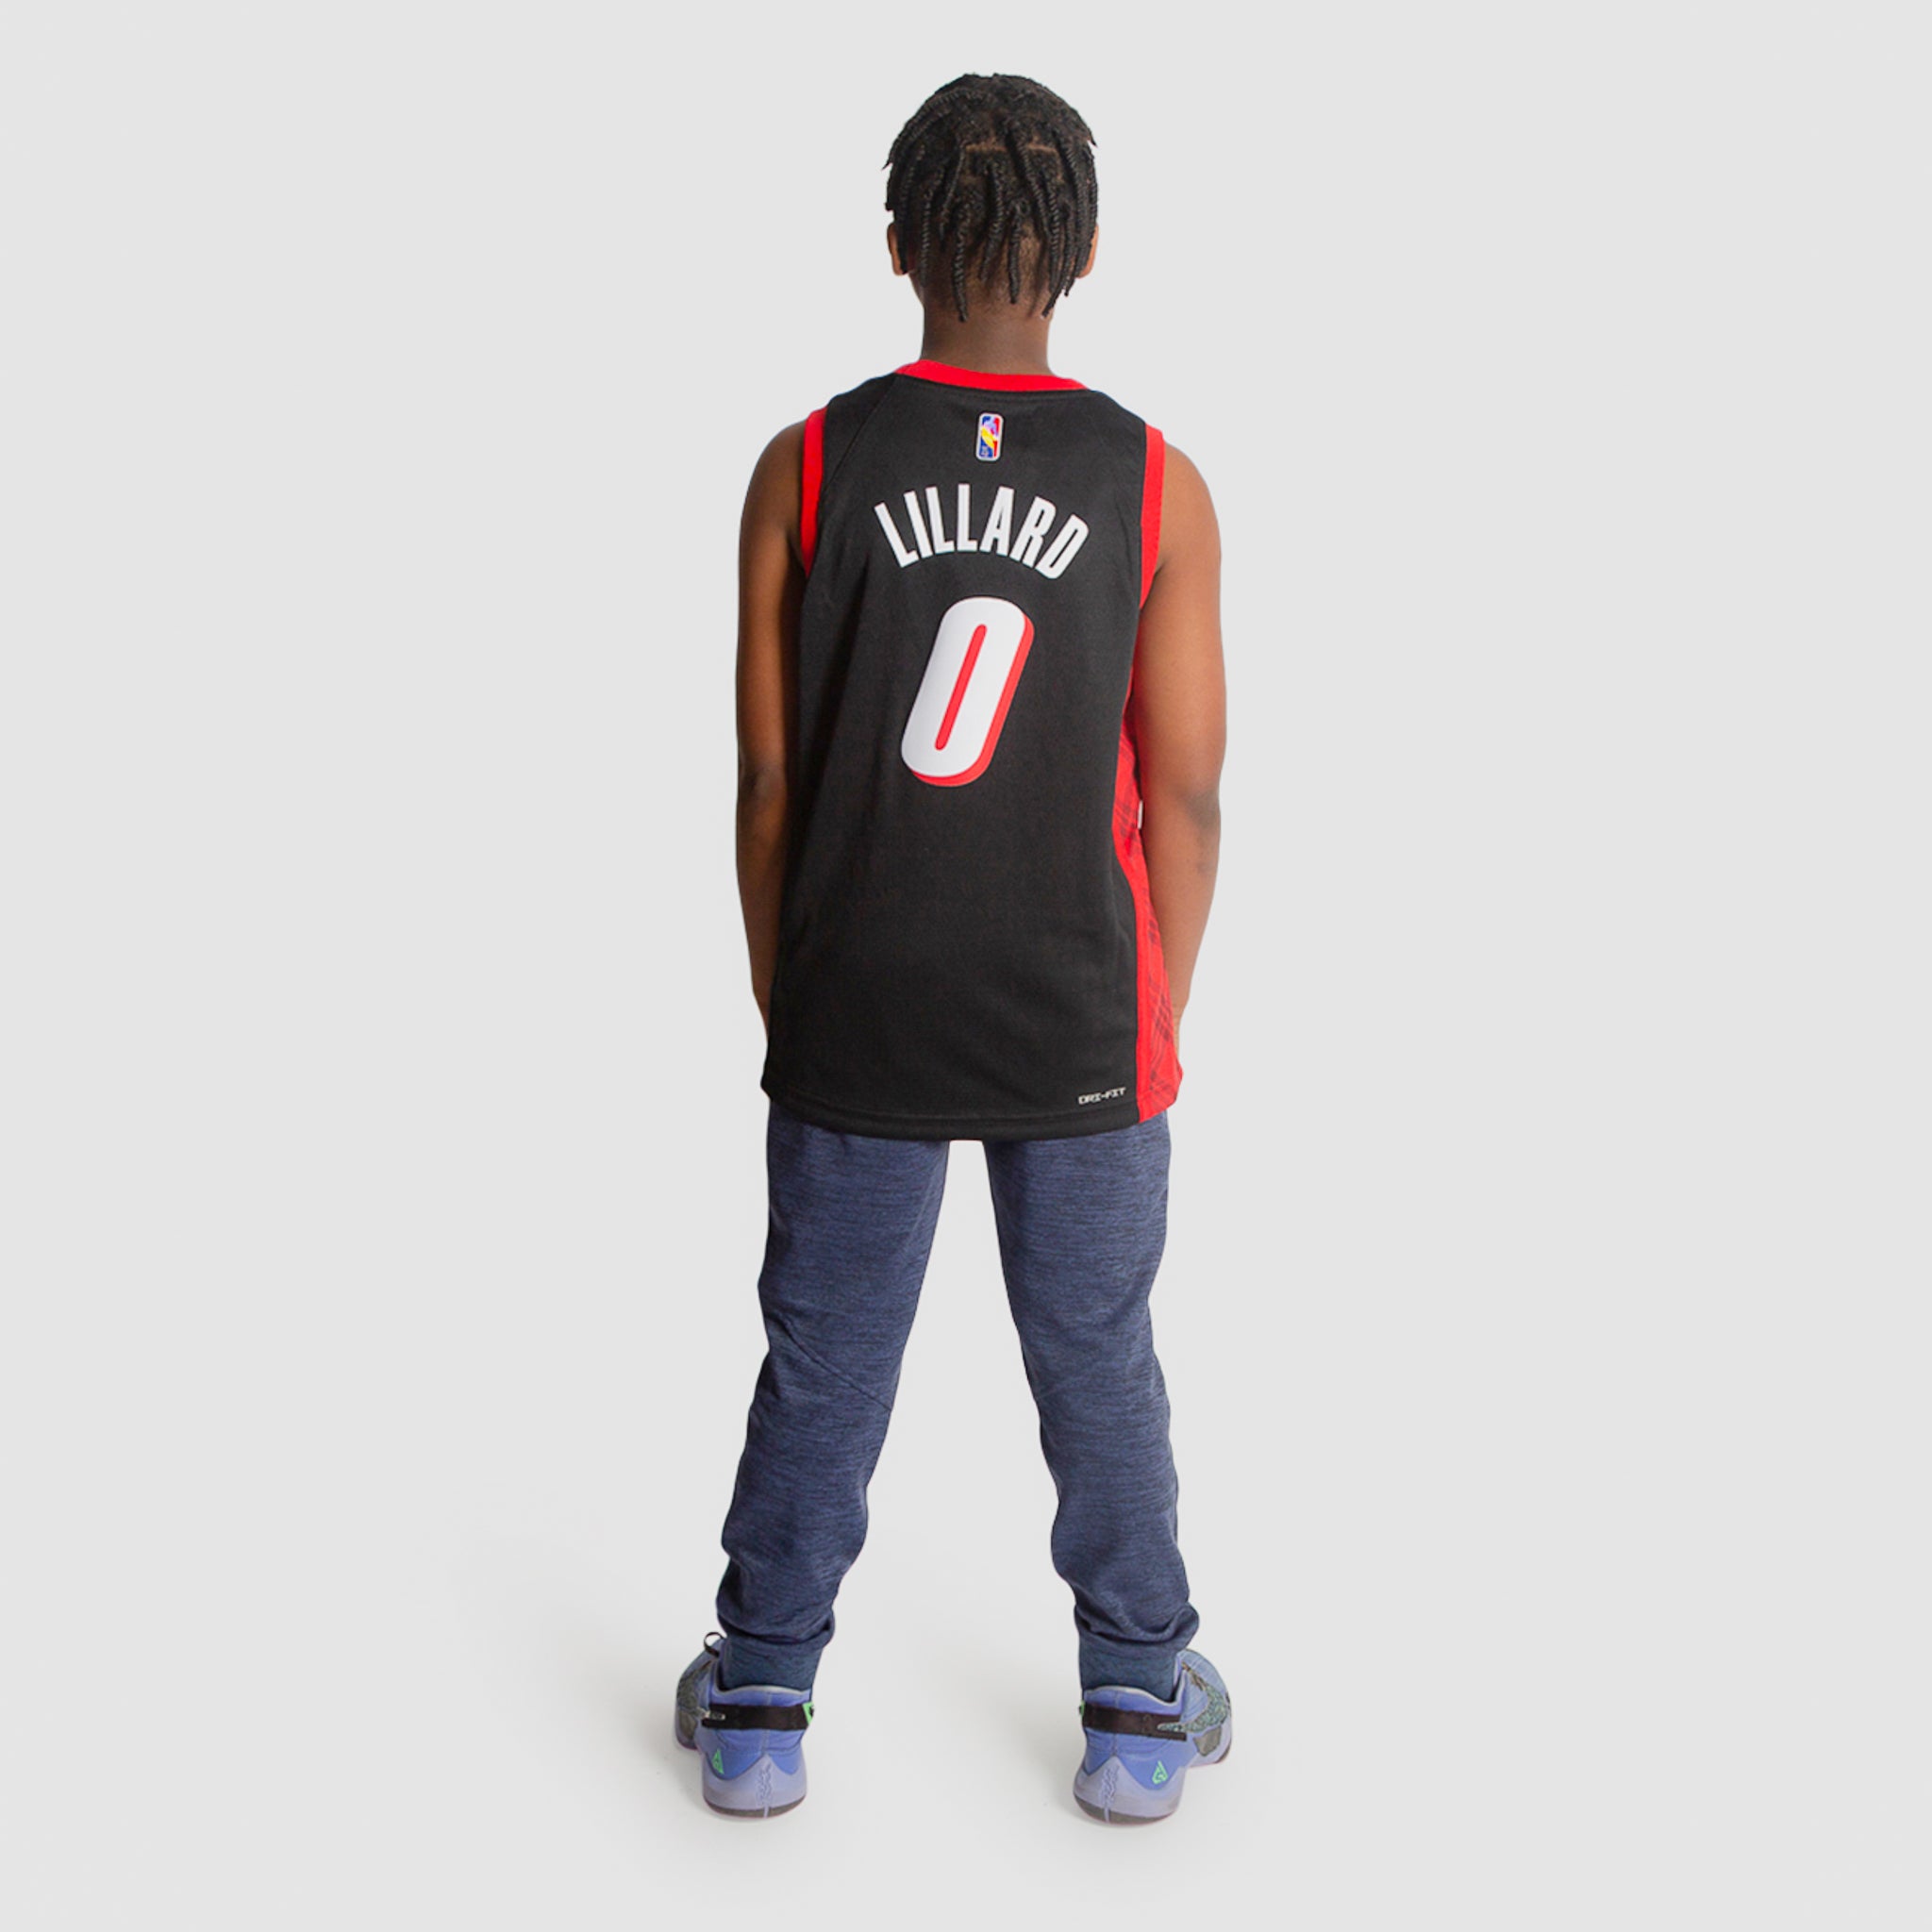 NBA Portland Trail Blazers Damian Lillard #0 Men's Replica Jersey